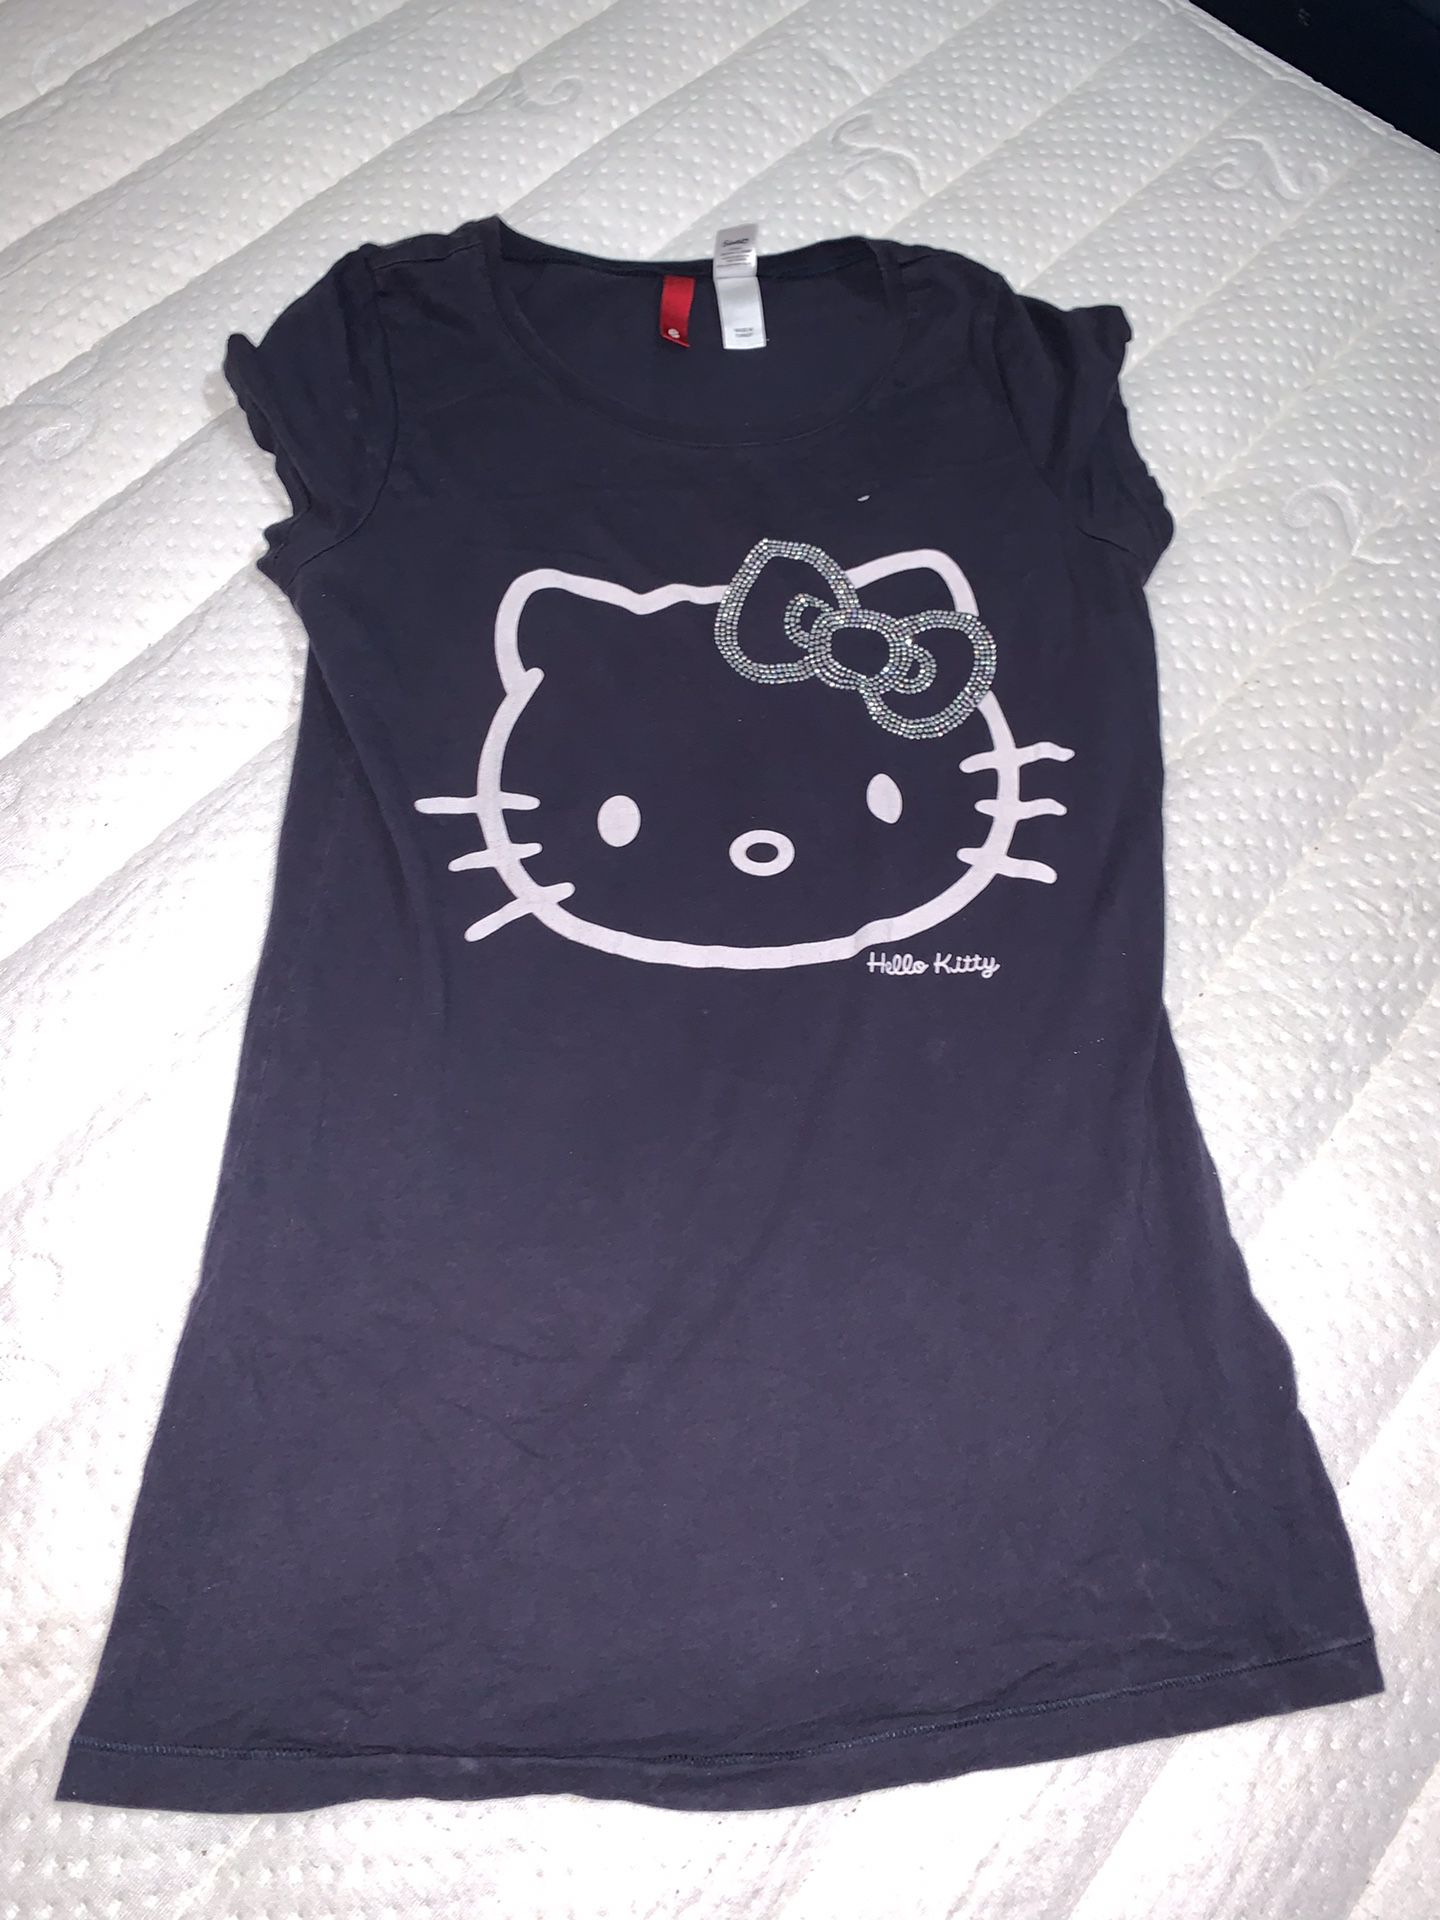 $5 Girls T-shirt hello kitty size 8